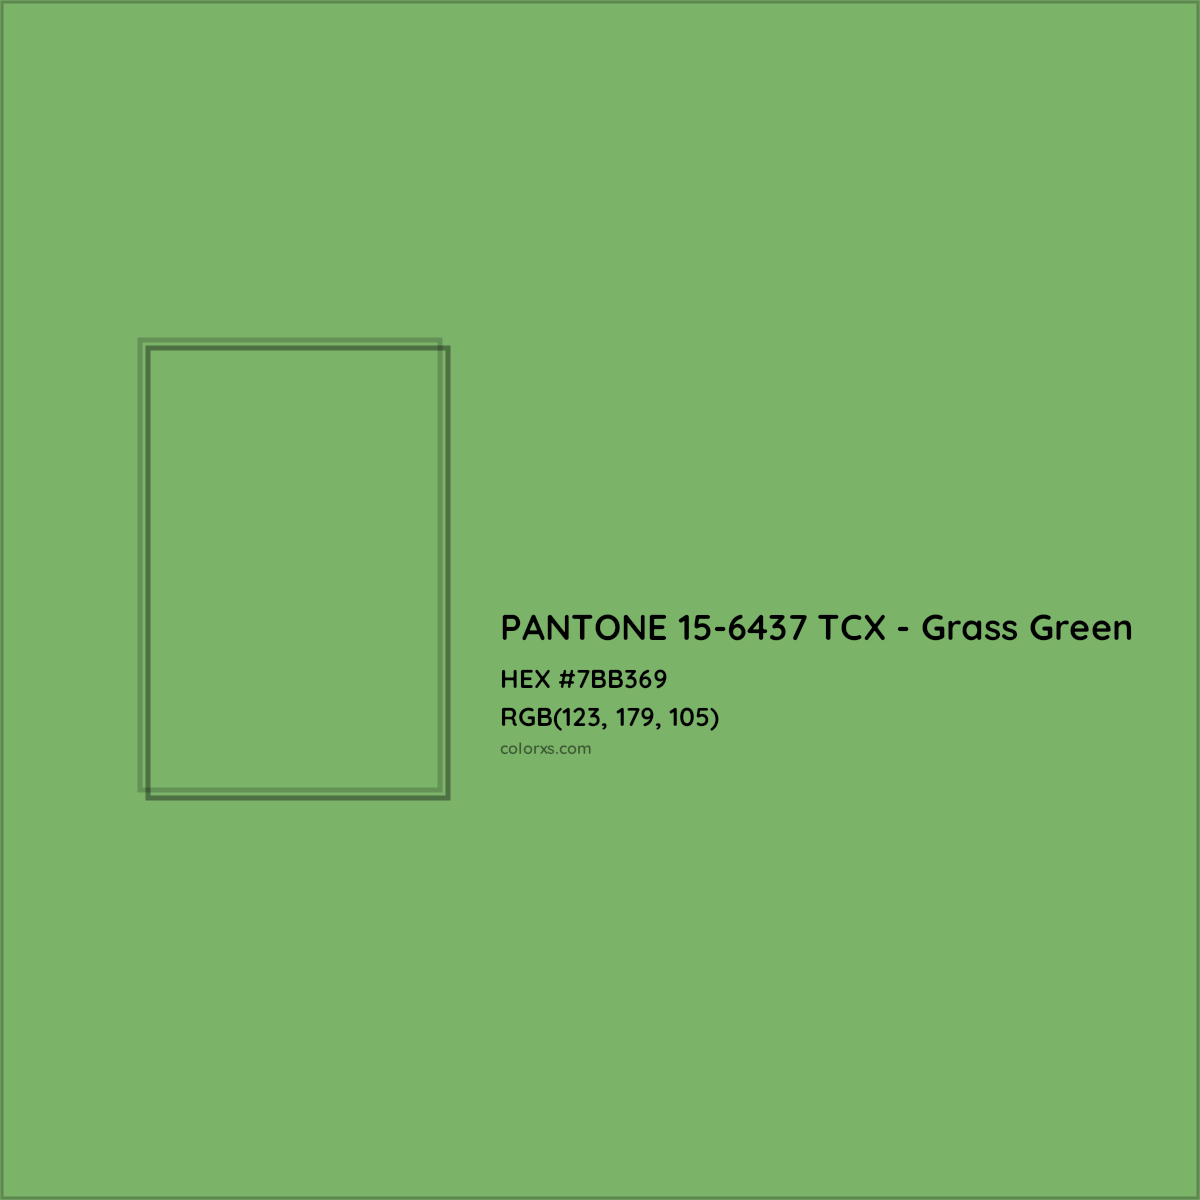 HEX #7BB369 PANTONE 15-6437 TCX - Grass Green CMS Pantone TCX - Color Code